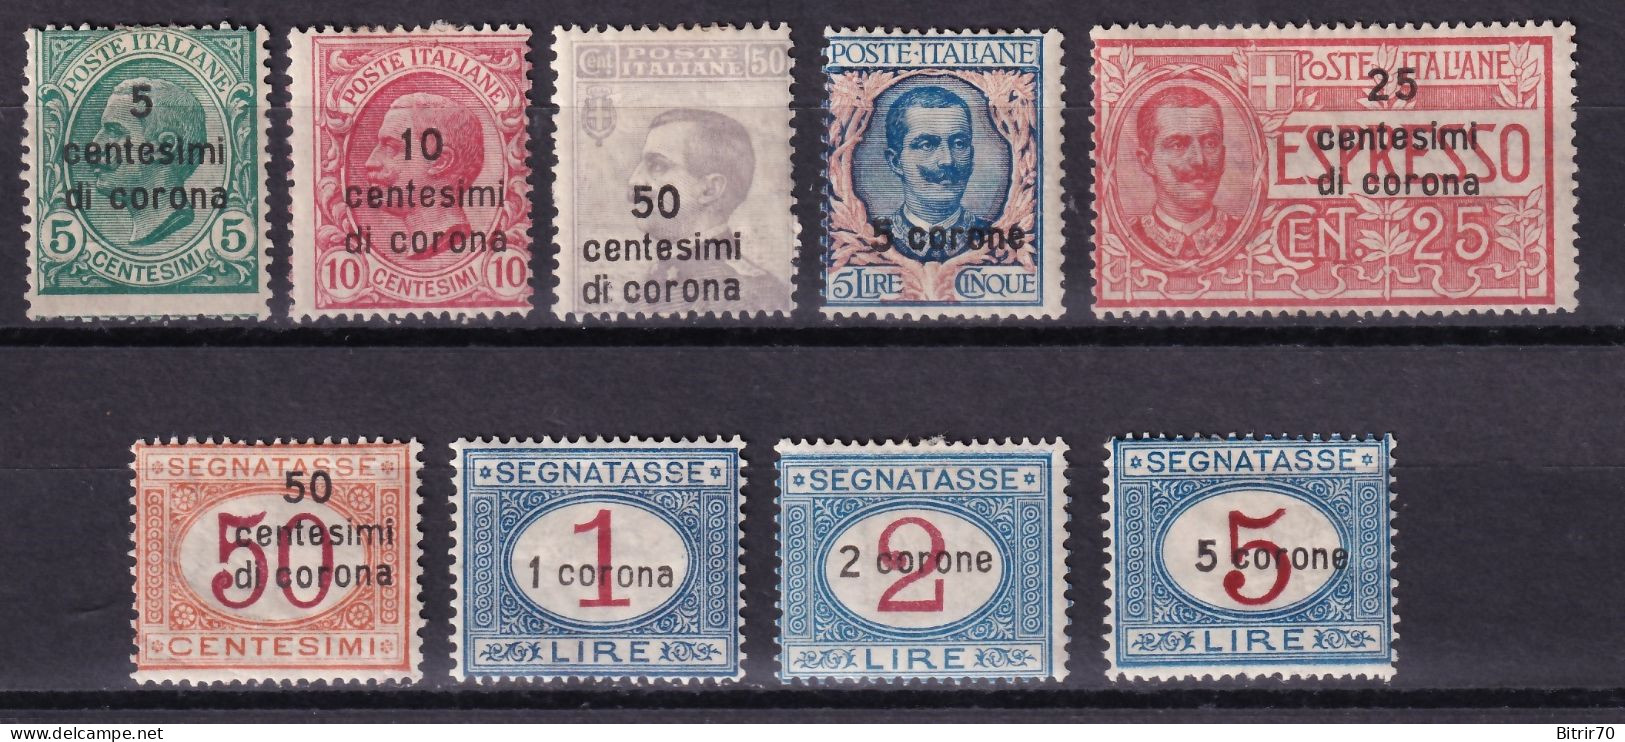 Italia, Dalmatia 1921-1922 Lote De Sellos, Distintos Valores, MH - Dalmatië